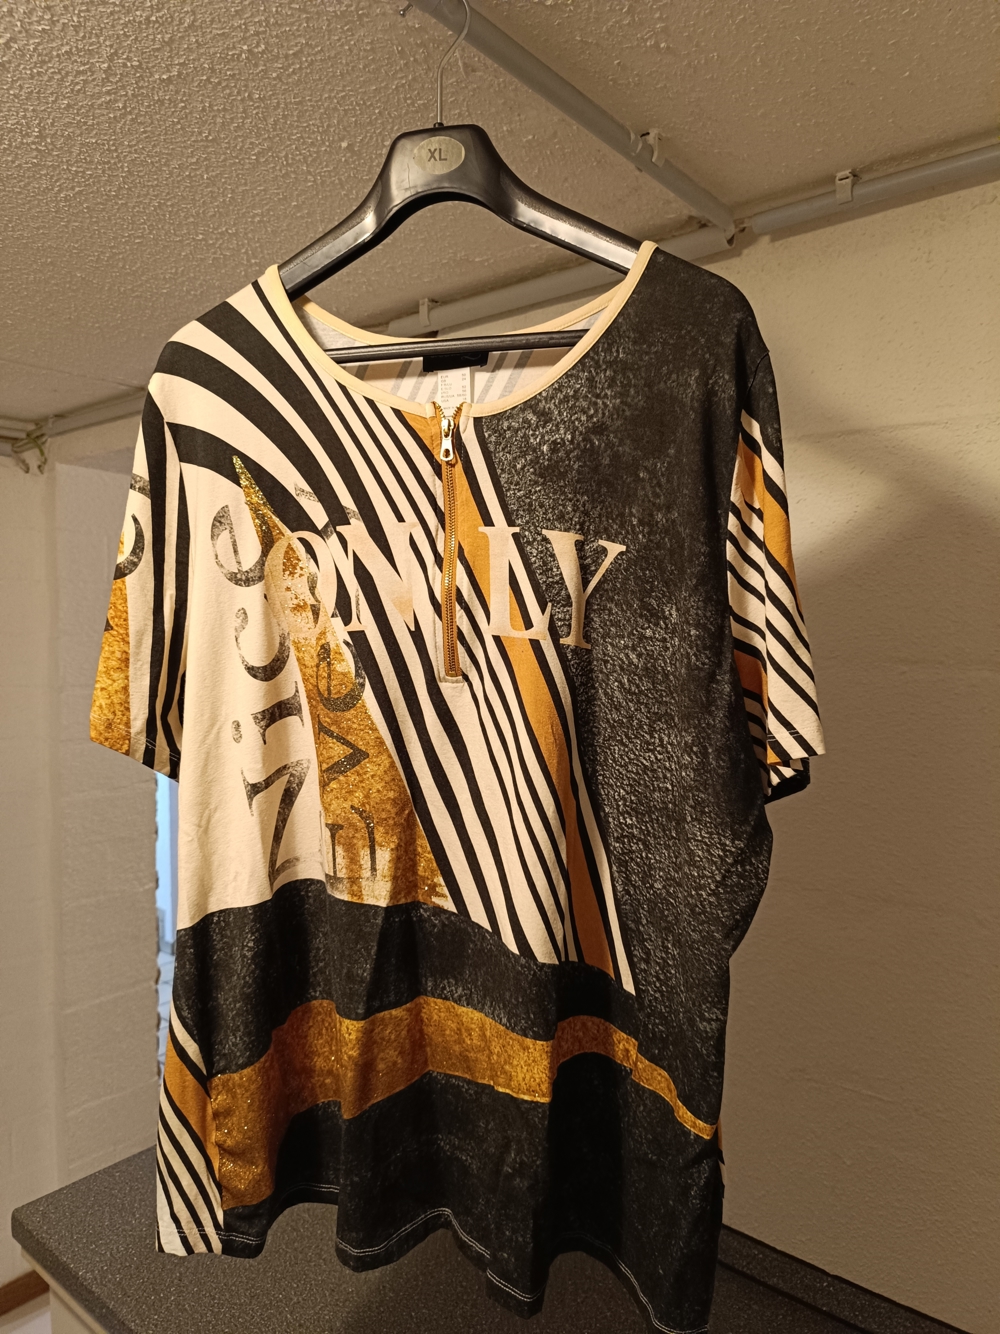 Damen Kurzarm-Shirt Creation L Größe 50, braun-schwarz-gold